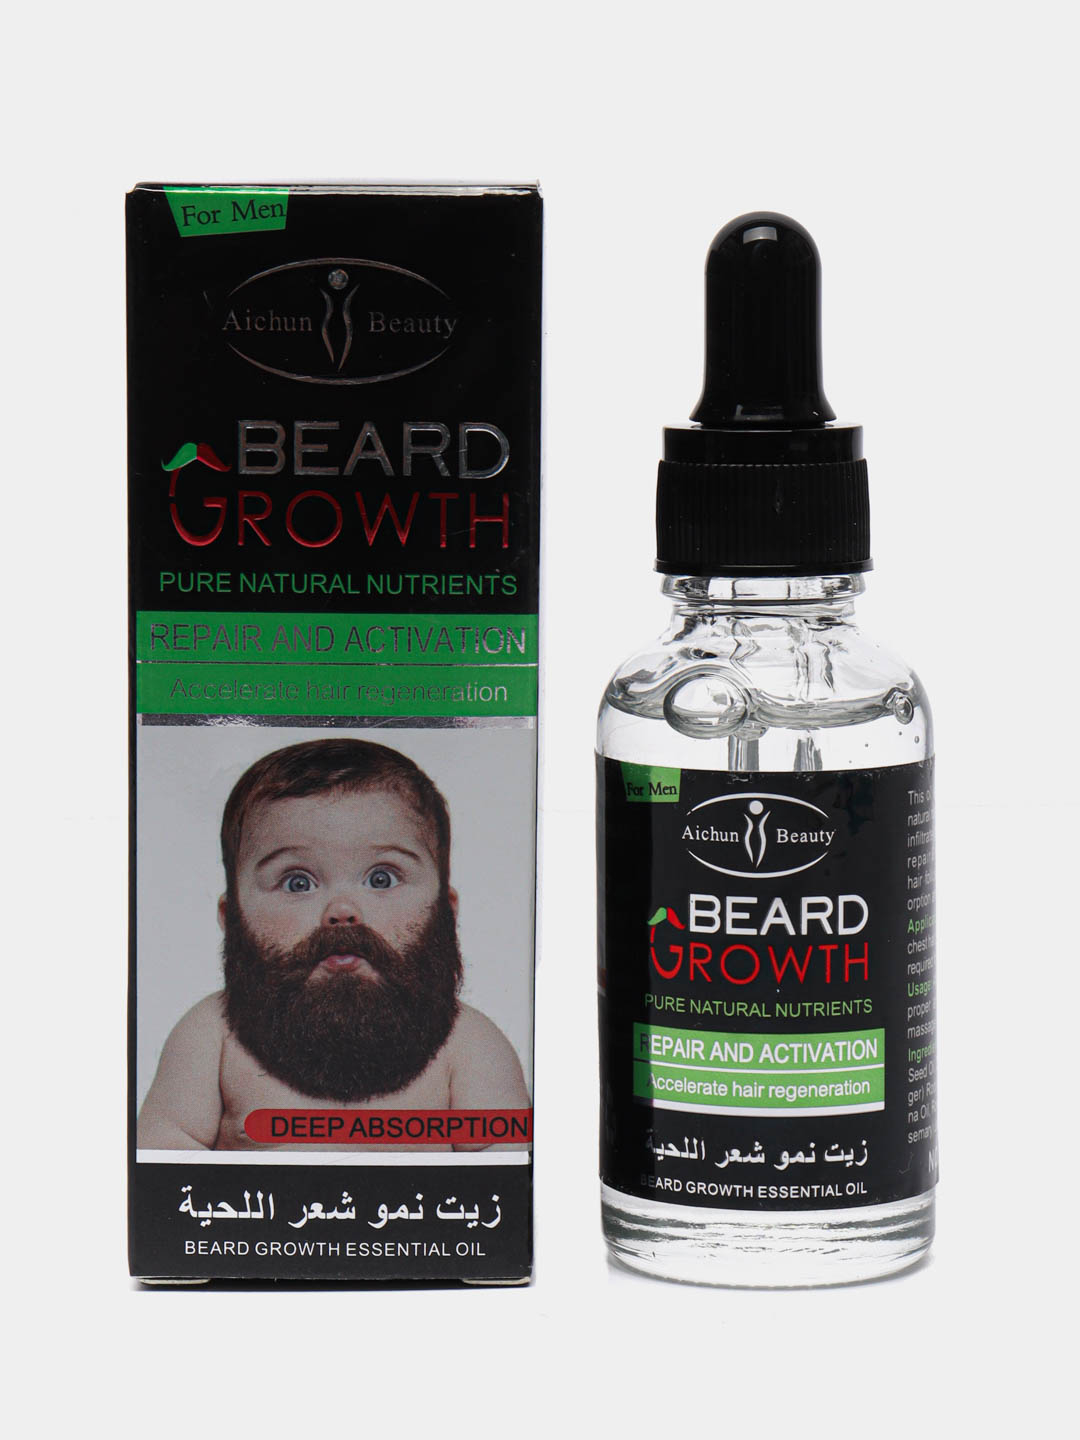 Активатор роста бороды. Масло для бороды и усов Aichun Beauty Beard 30мл. Beard growth масло для роста бороды. Disaar для бороды. Реклама масла для роста бороды.